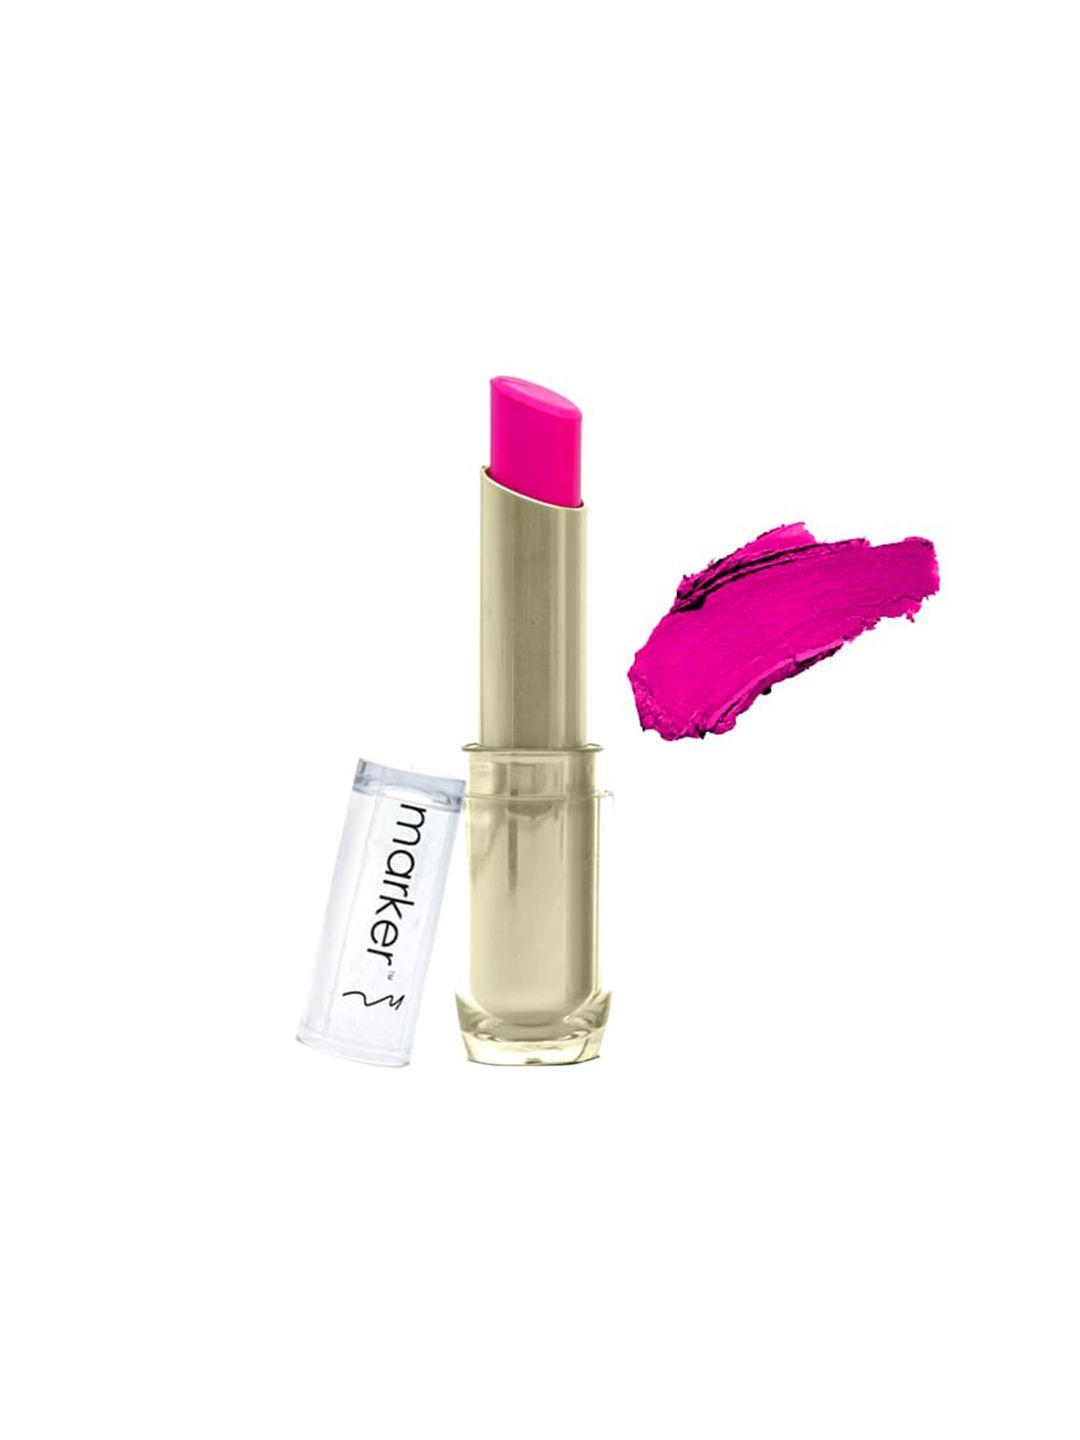 beautyrelay london marker shine glamm lipstick 3.5g - pink princess